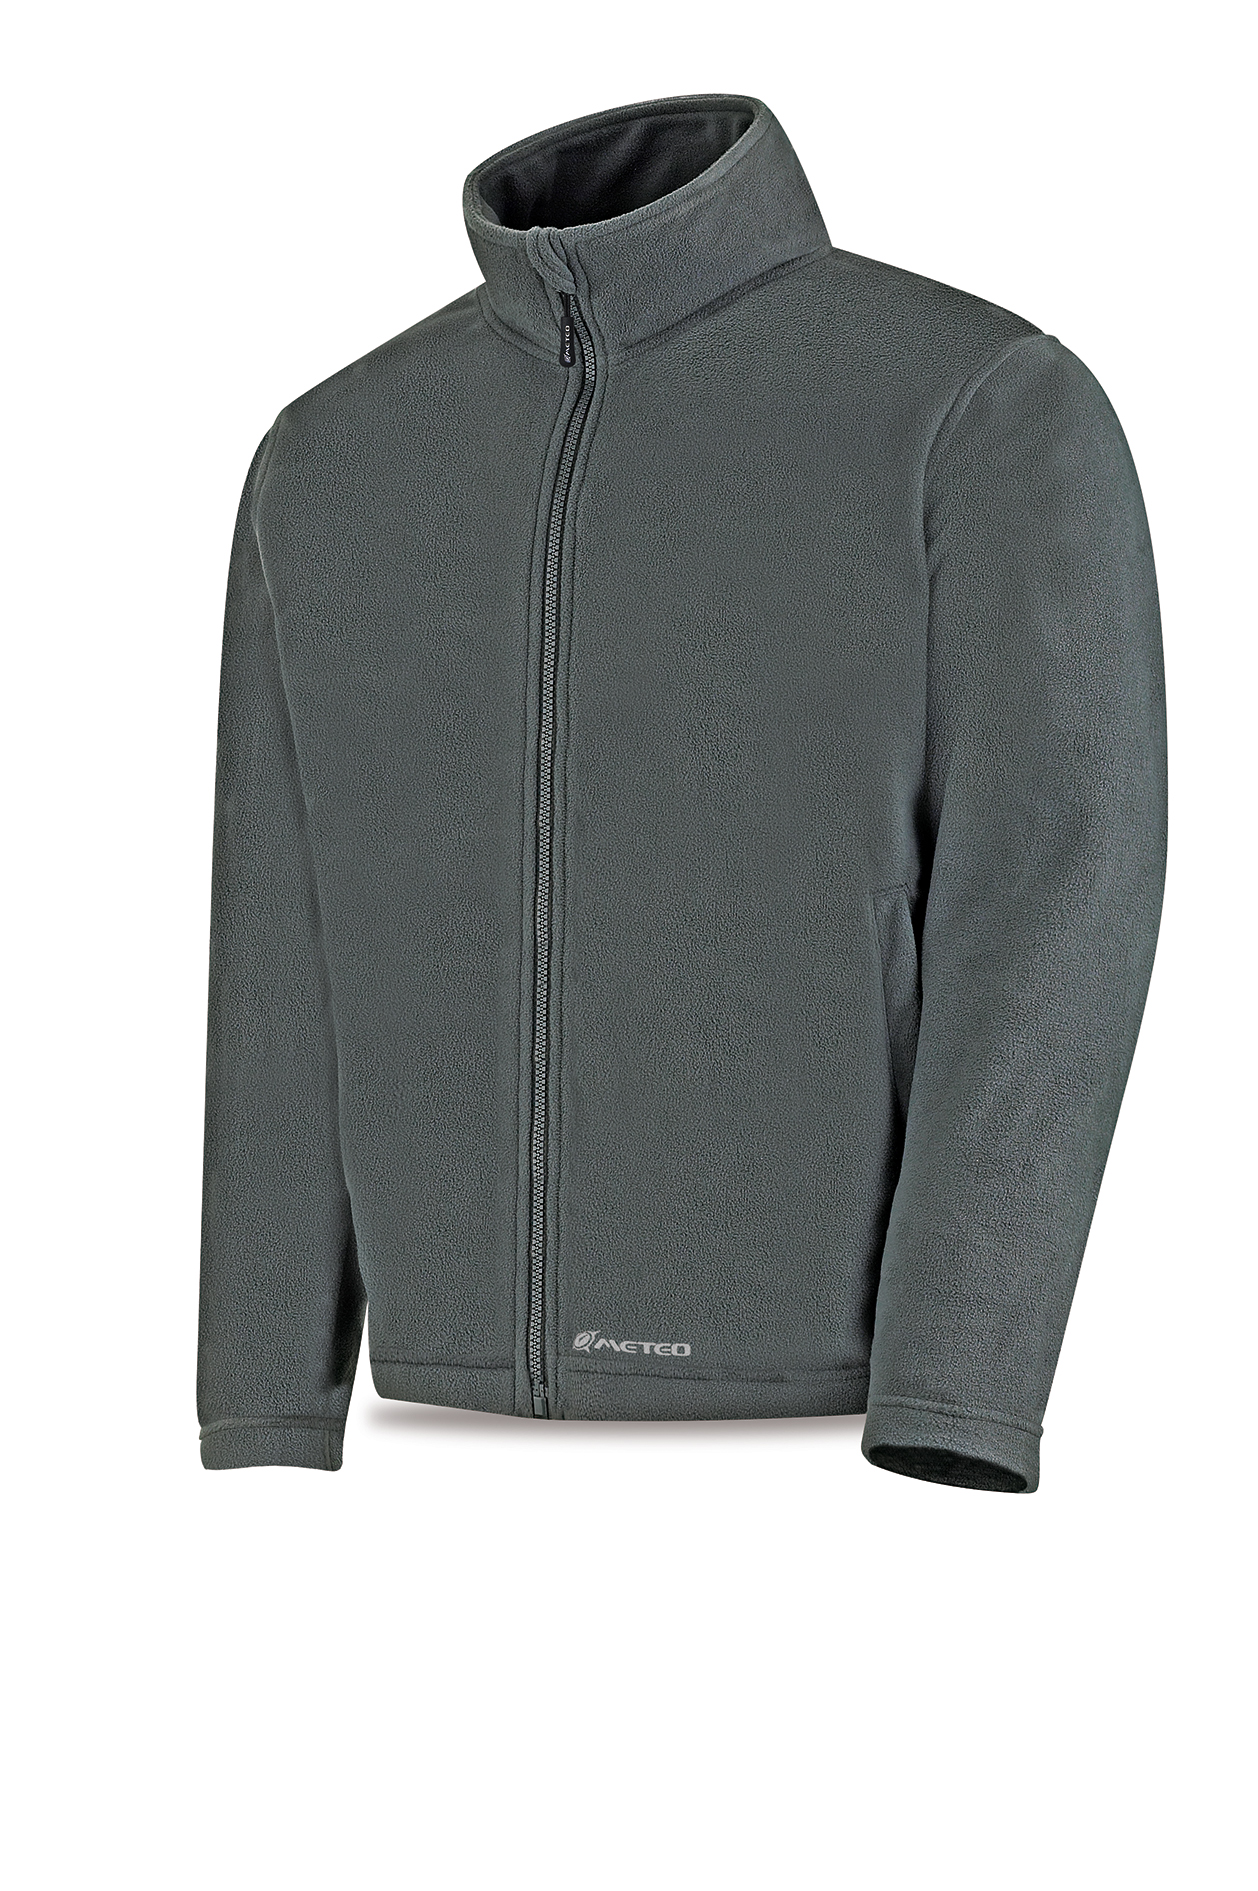 288-CHPG Coats and Rain Gear Solar Jackets QUETZAL model fleece jacket. Gray.